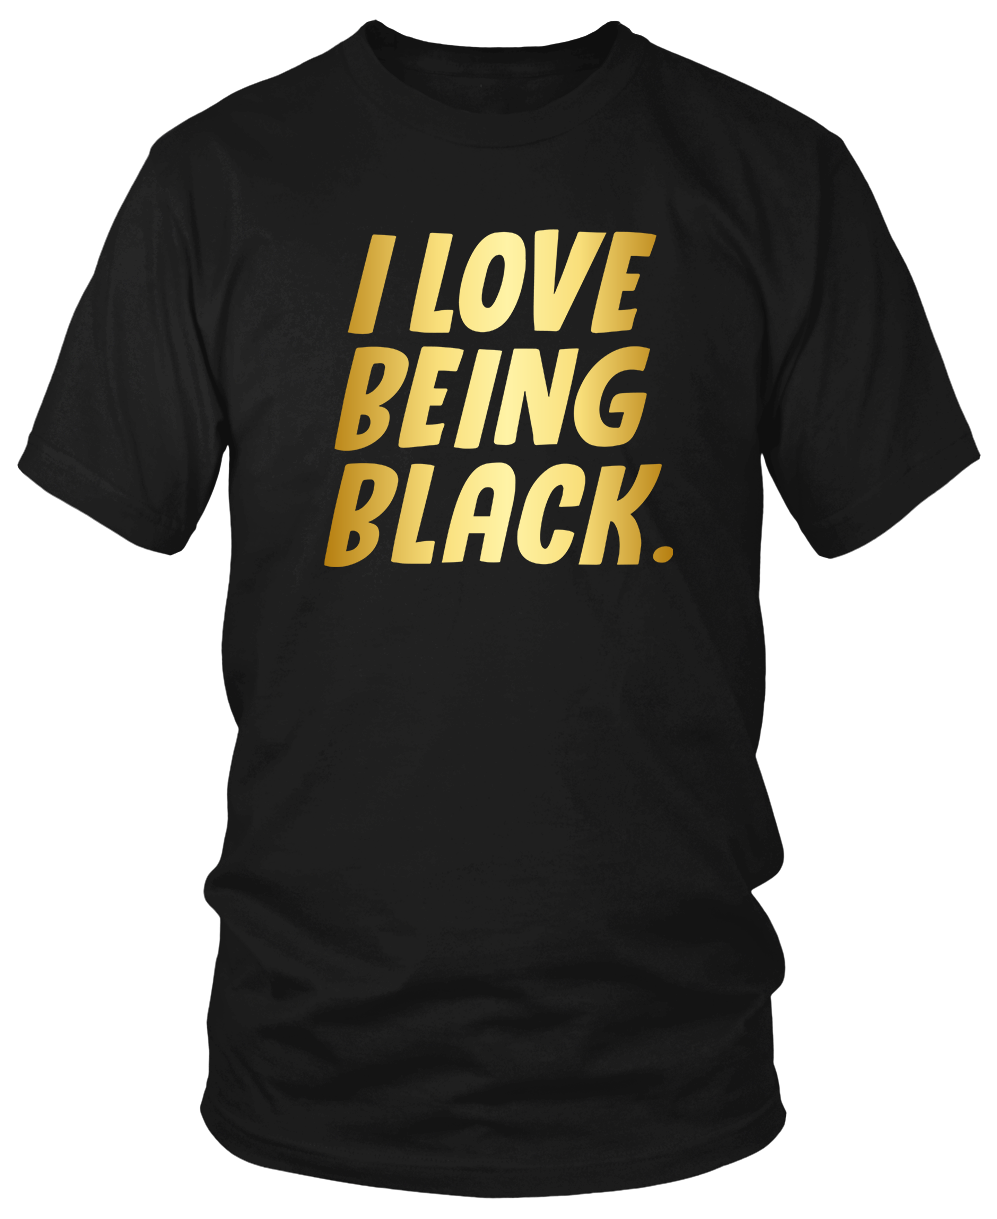 I LOVE BEING BLACK T-Shirts